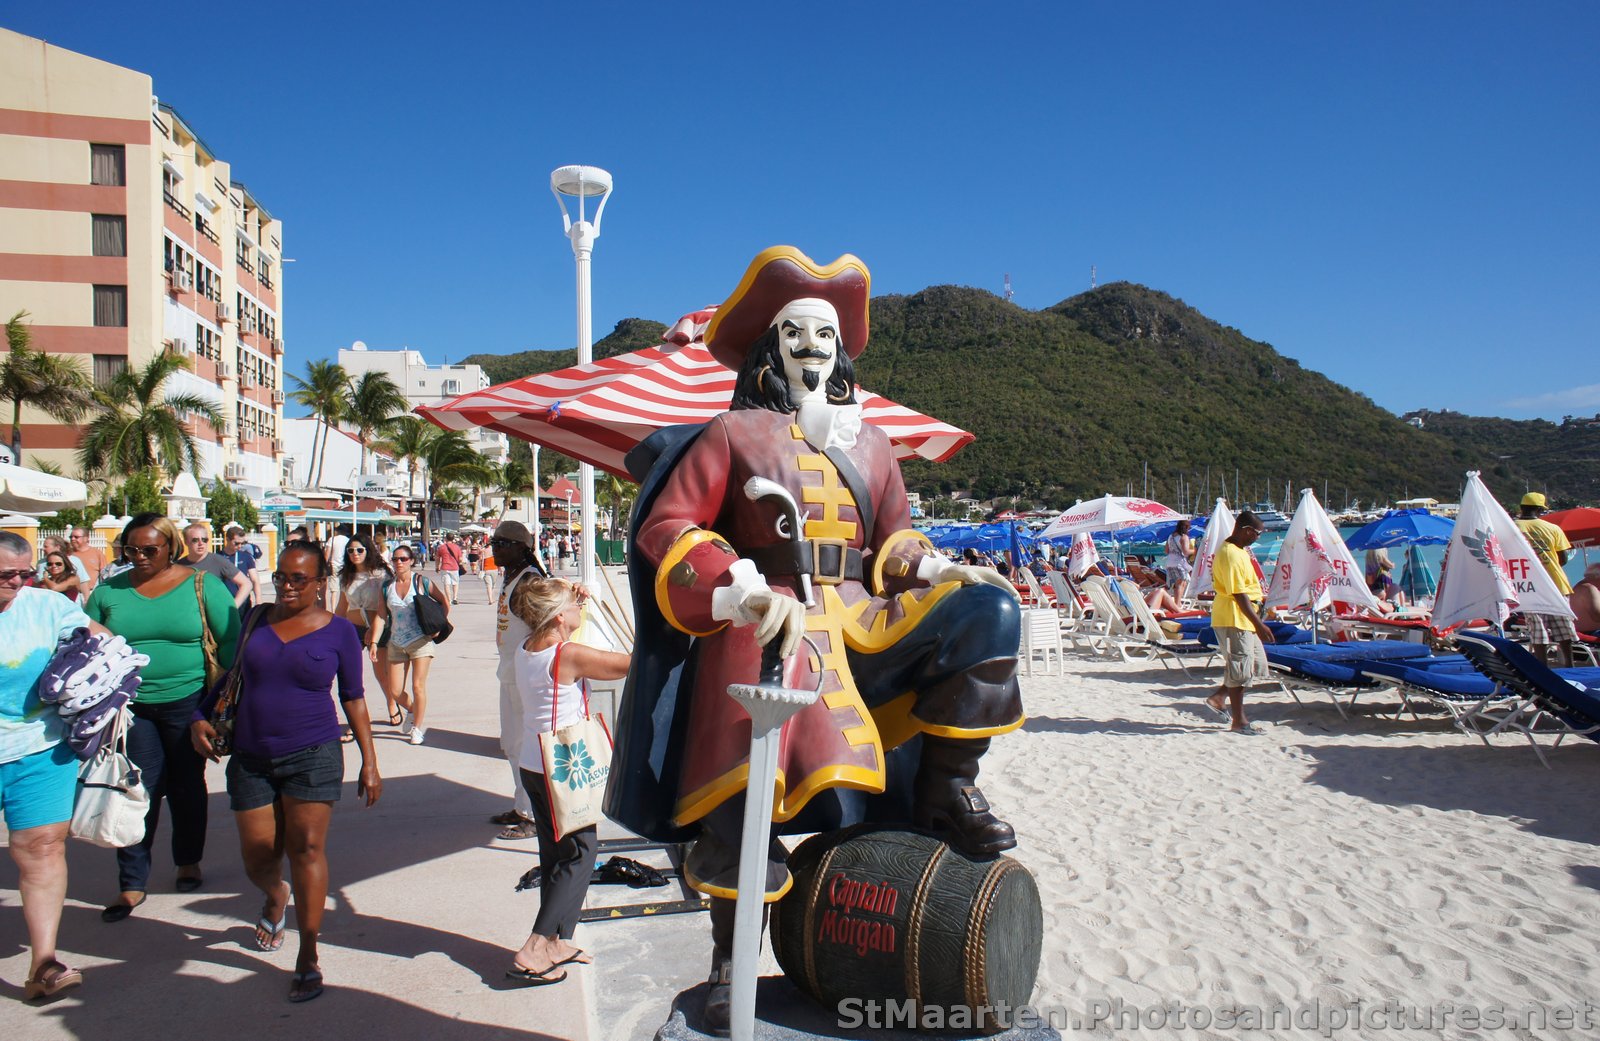 Captain Morgan statue Philipsburg beach St Maarten.jpg
